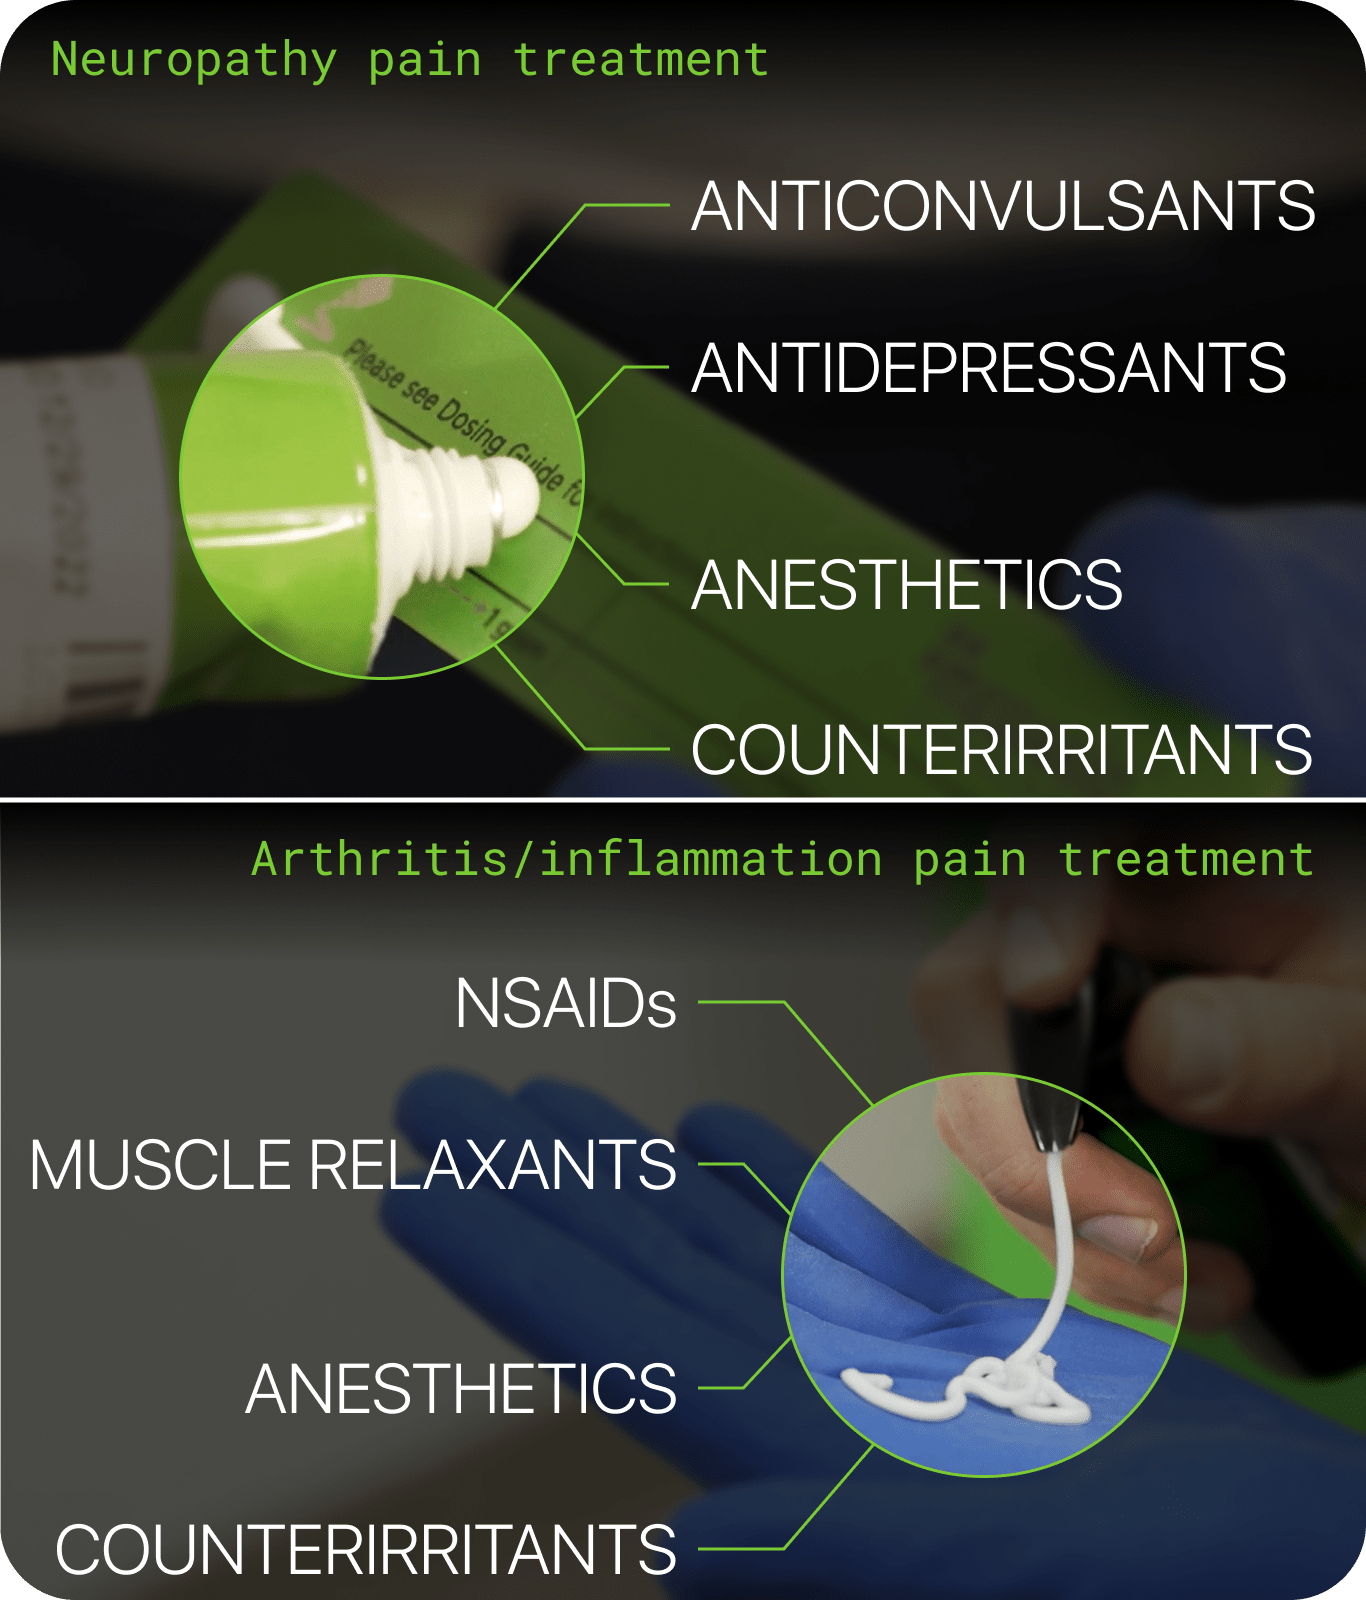 Examples of pain management cream formulations